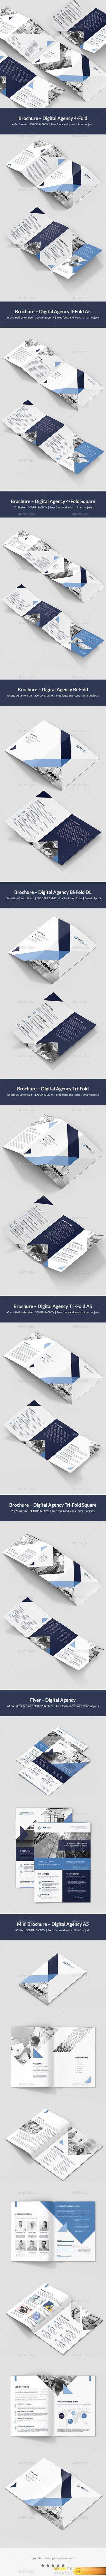 Graphicriver - Digital Agency – Brochures Bundle Print Templates 10 in 1 21522240